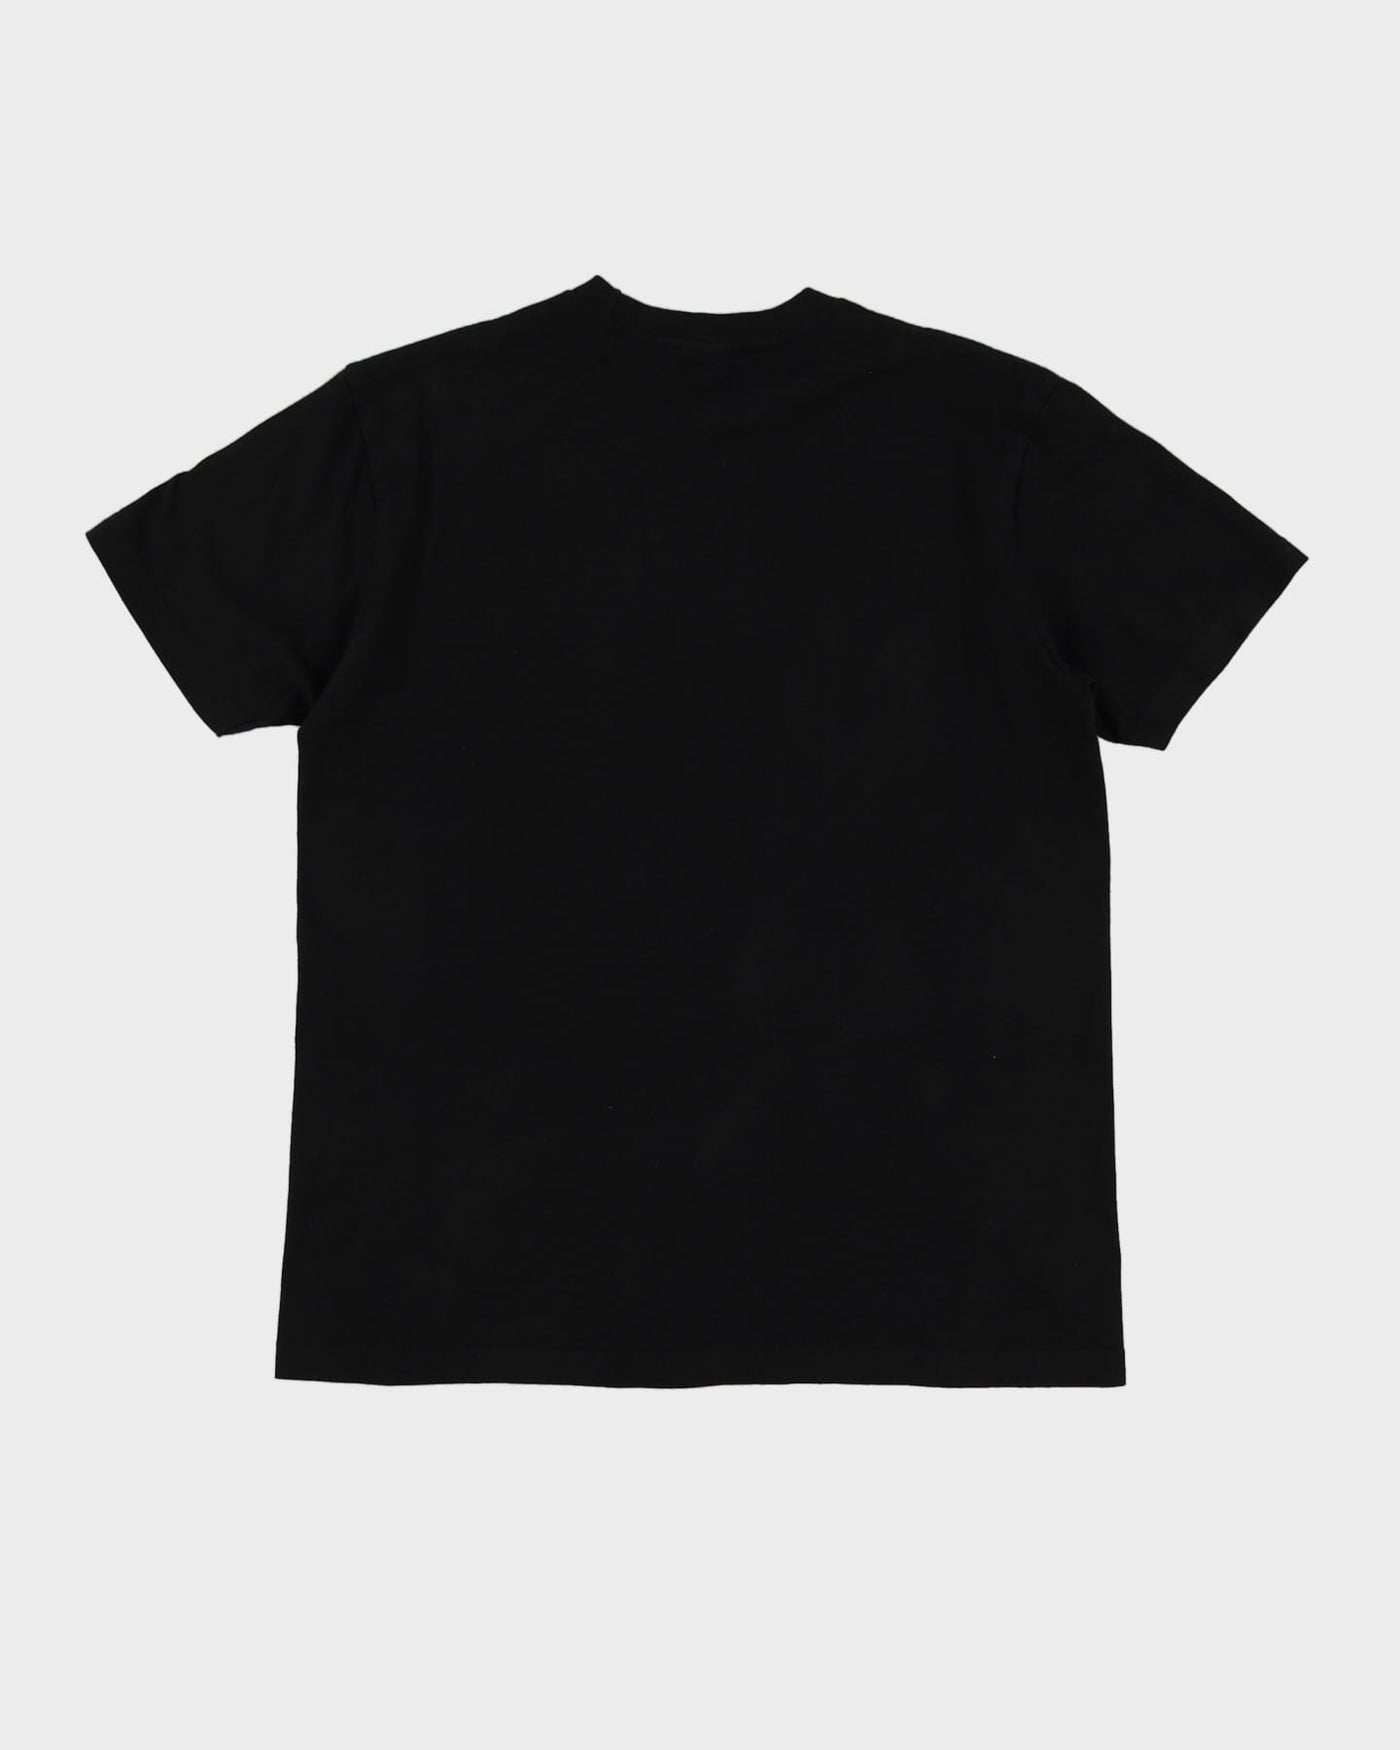 Supreme Originals Black Graphic T-Shirt - M